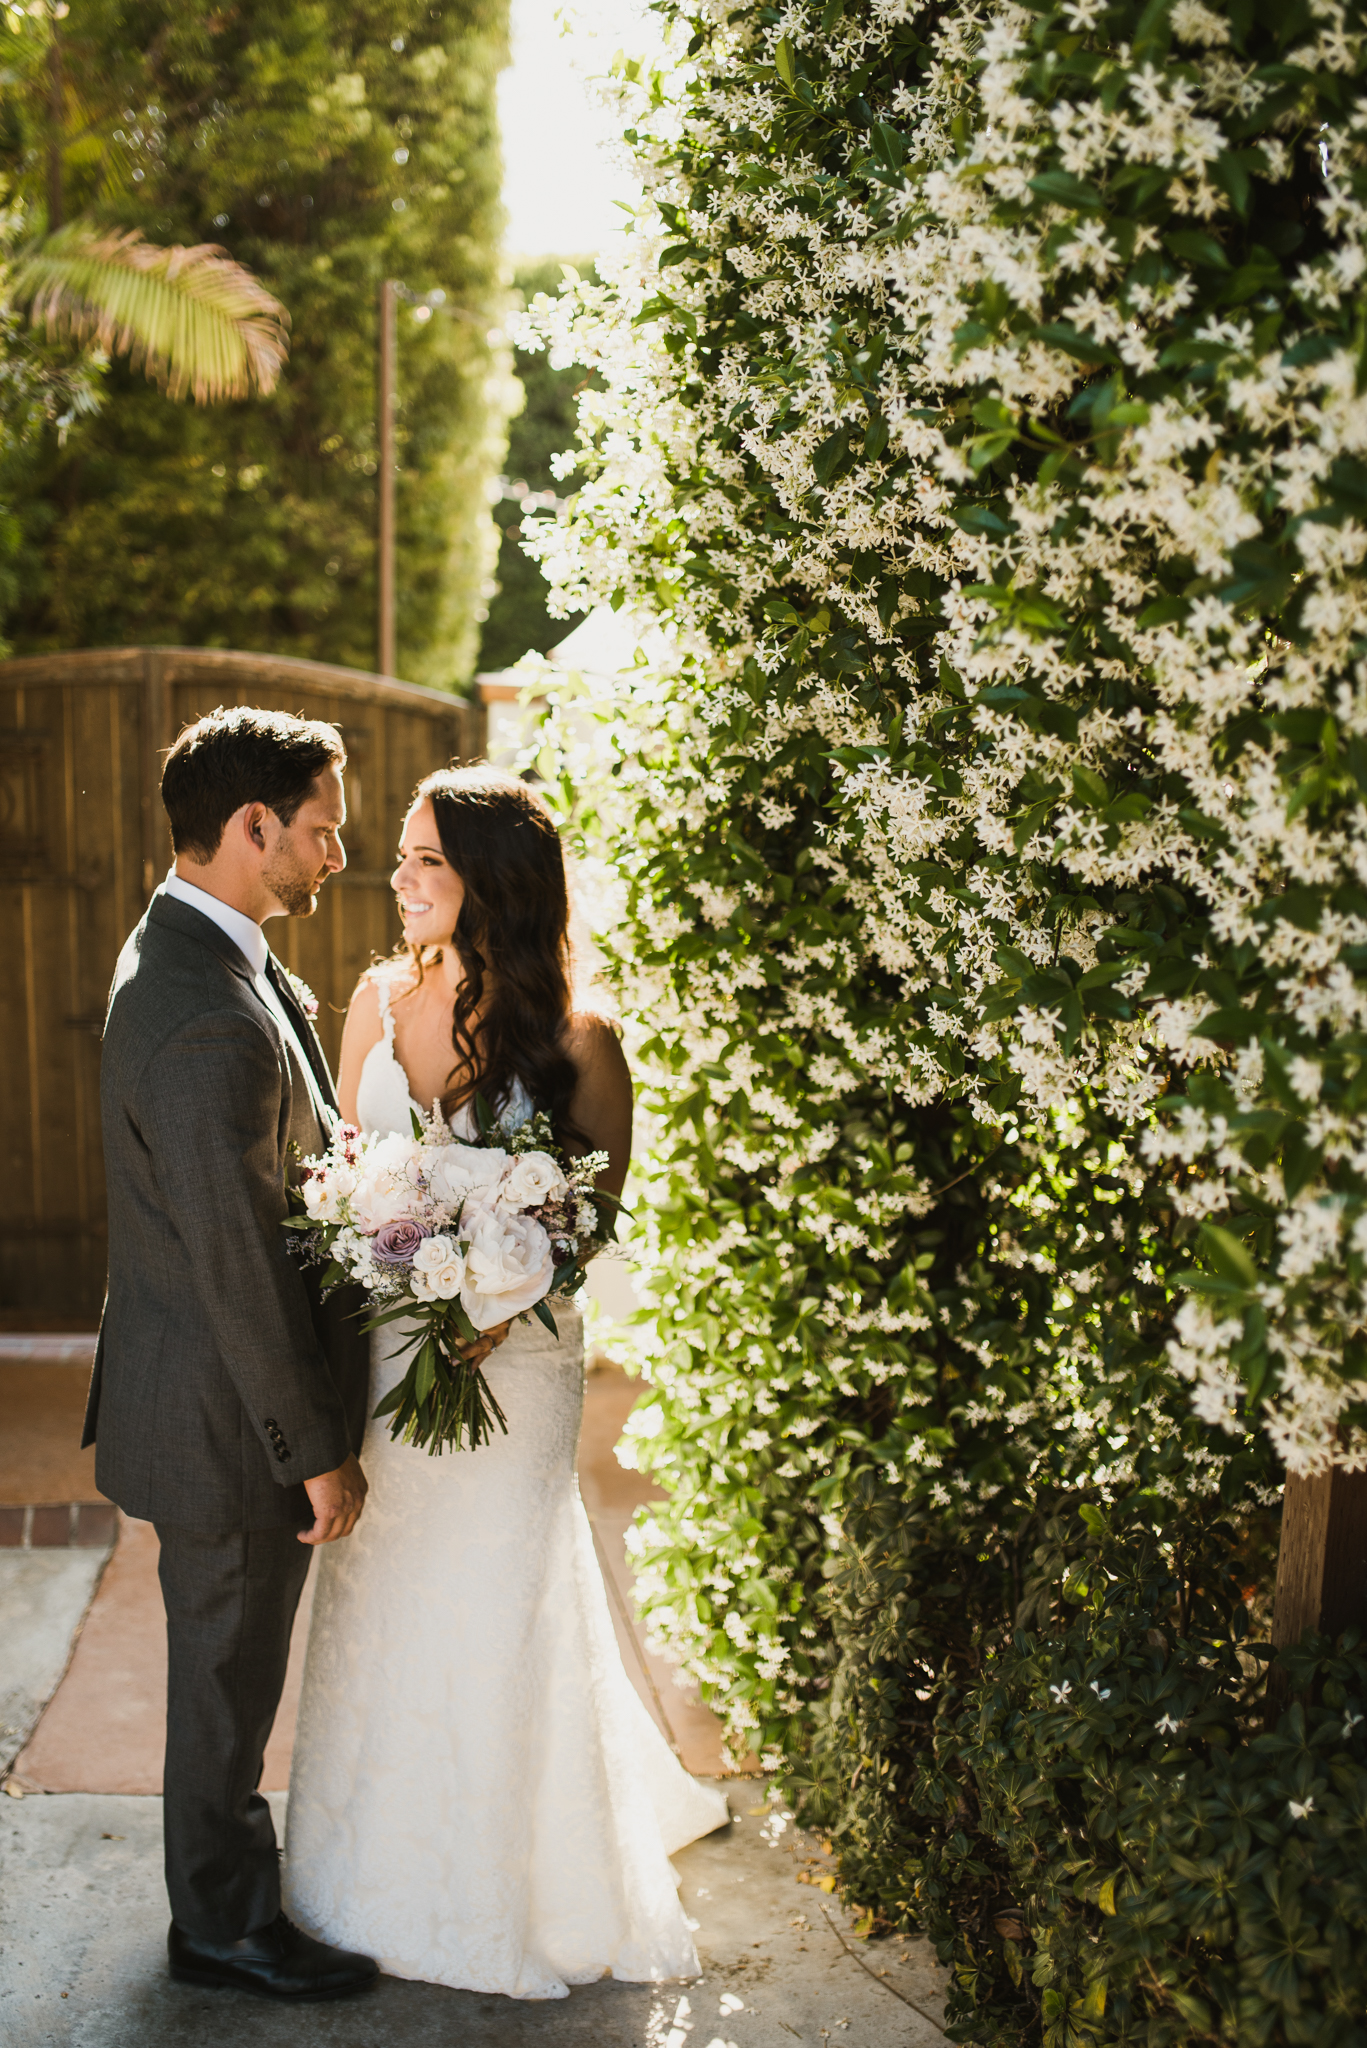 ©Isaiah & Taylor Photography - Franciscan Gardens Wedding Venue, San Juan Capistrano -60.jpg